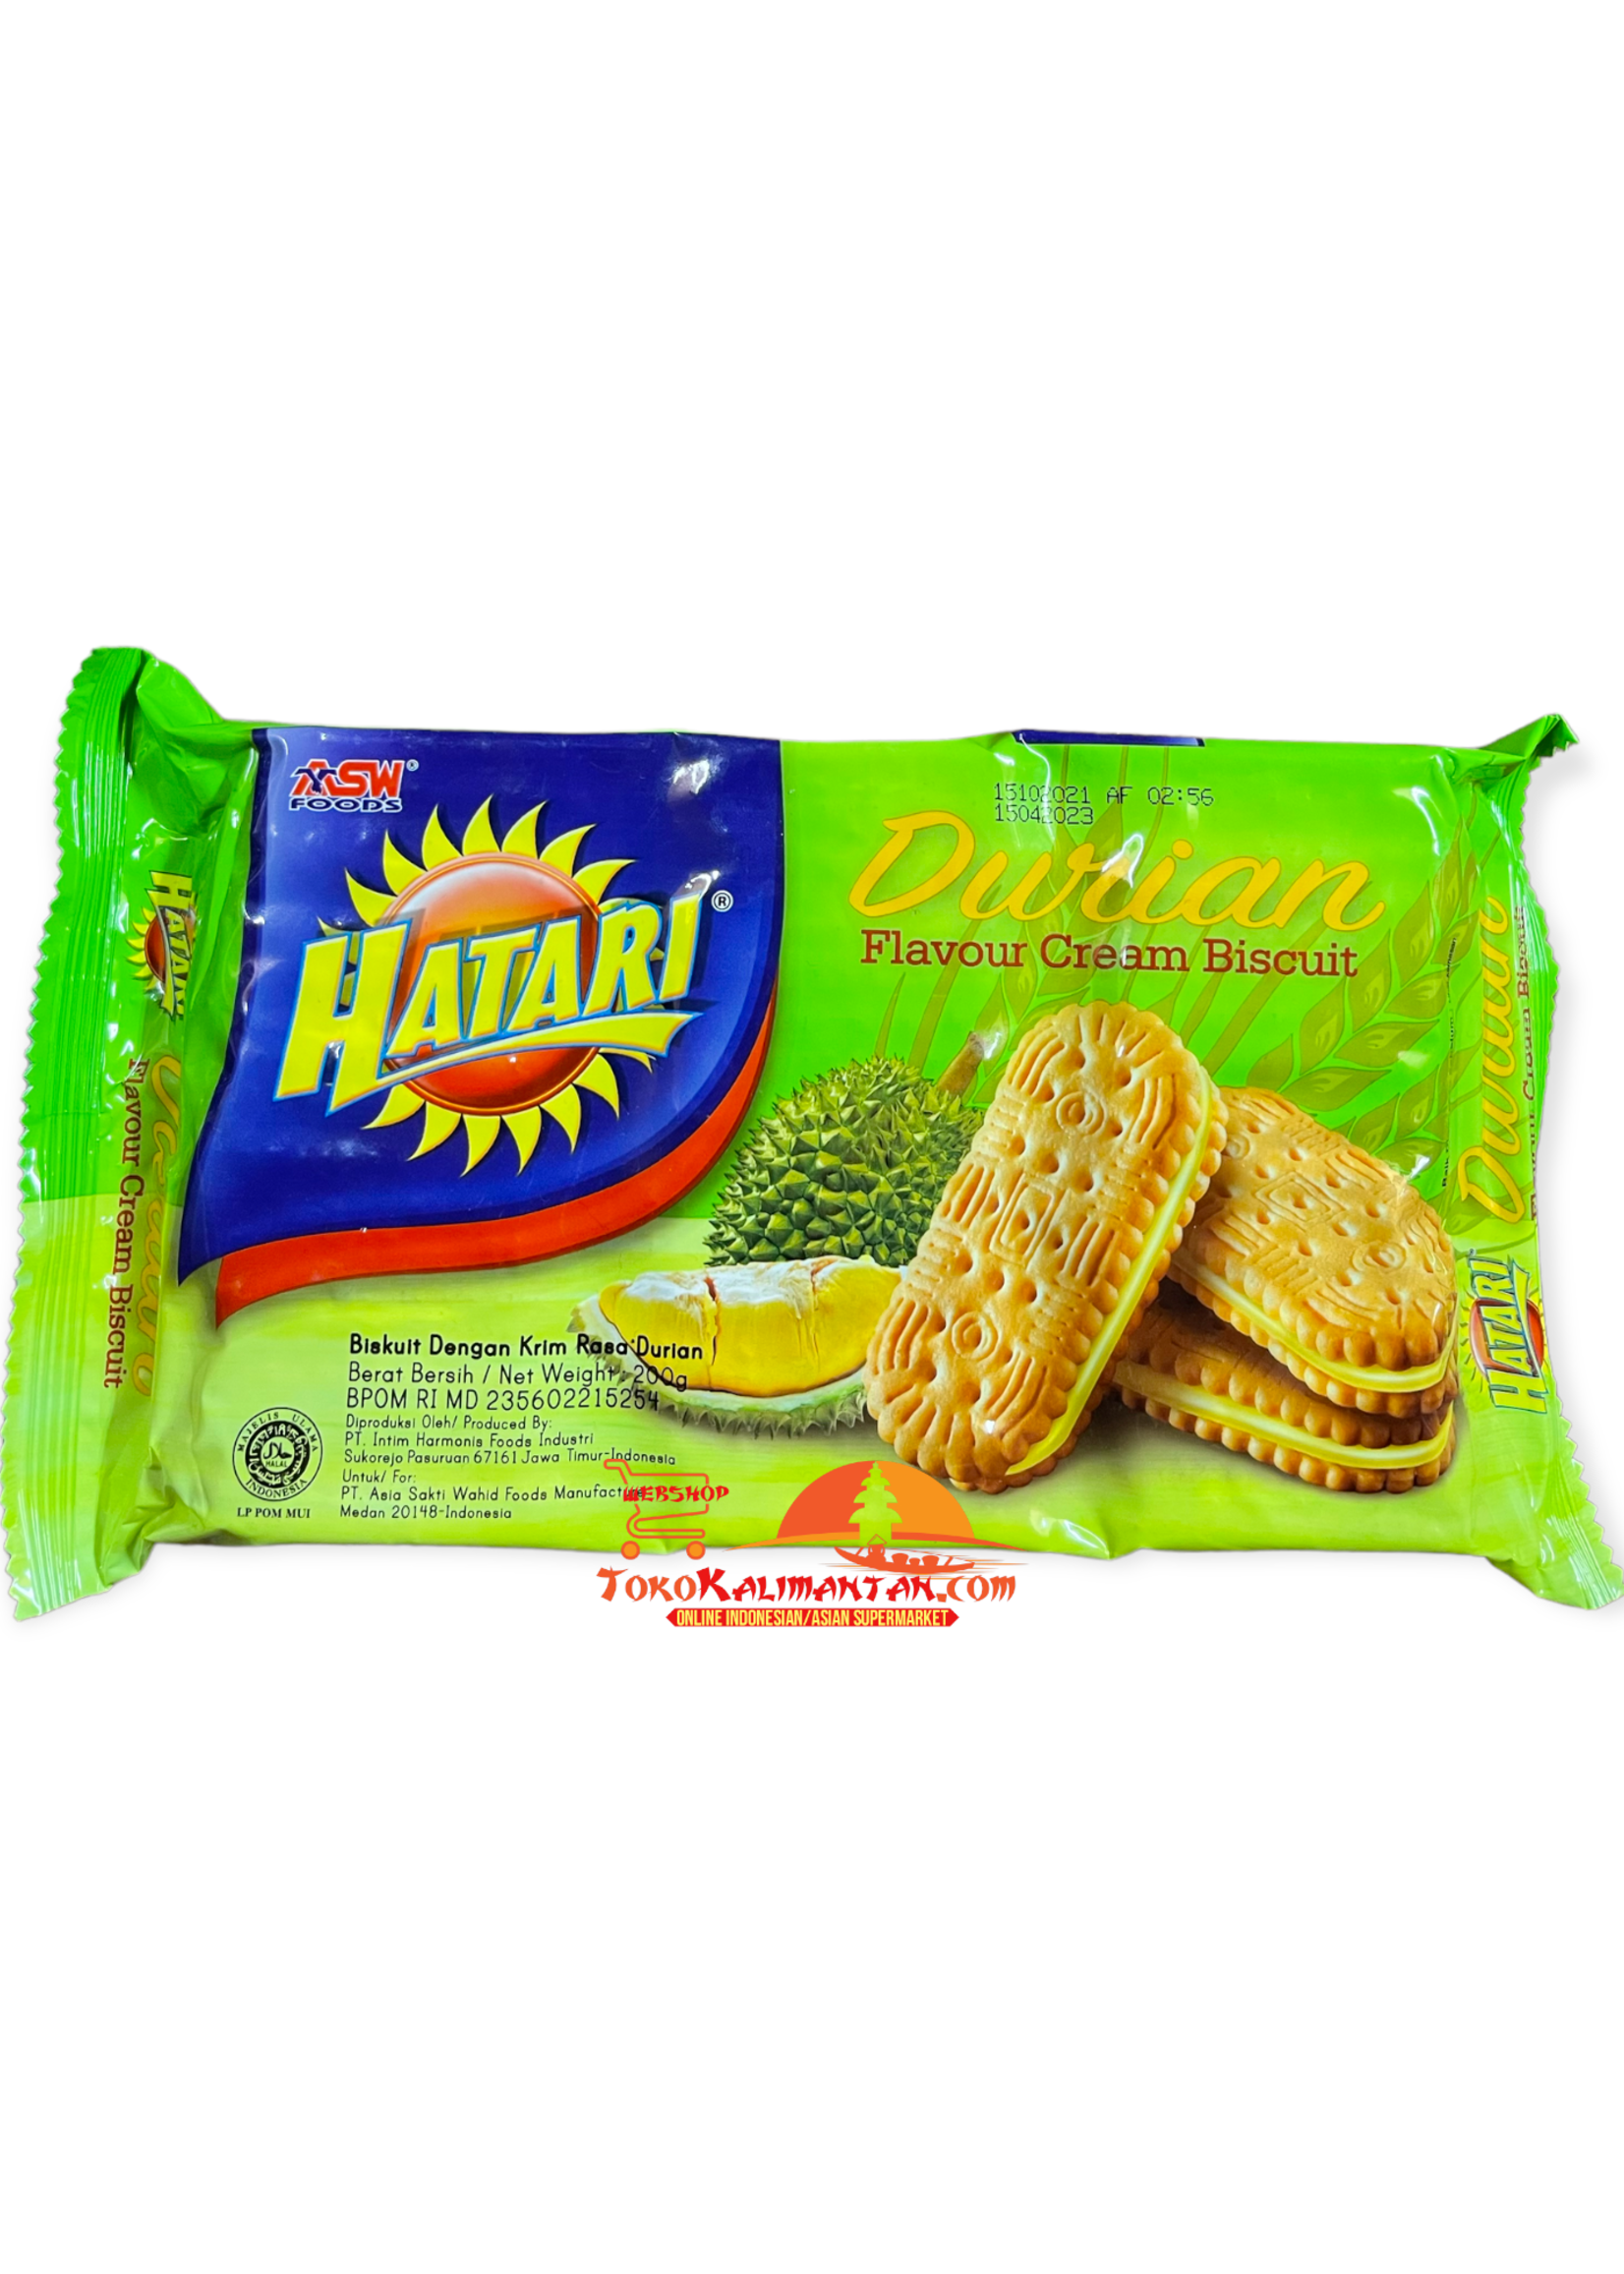 Hatari Hatari rasa durian flavour Cream biscuit